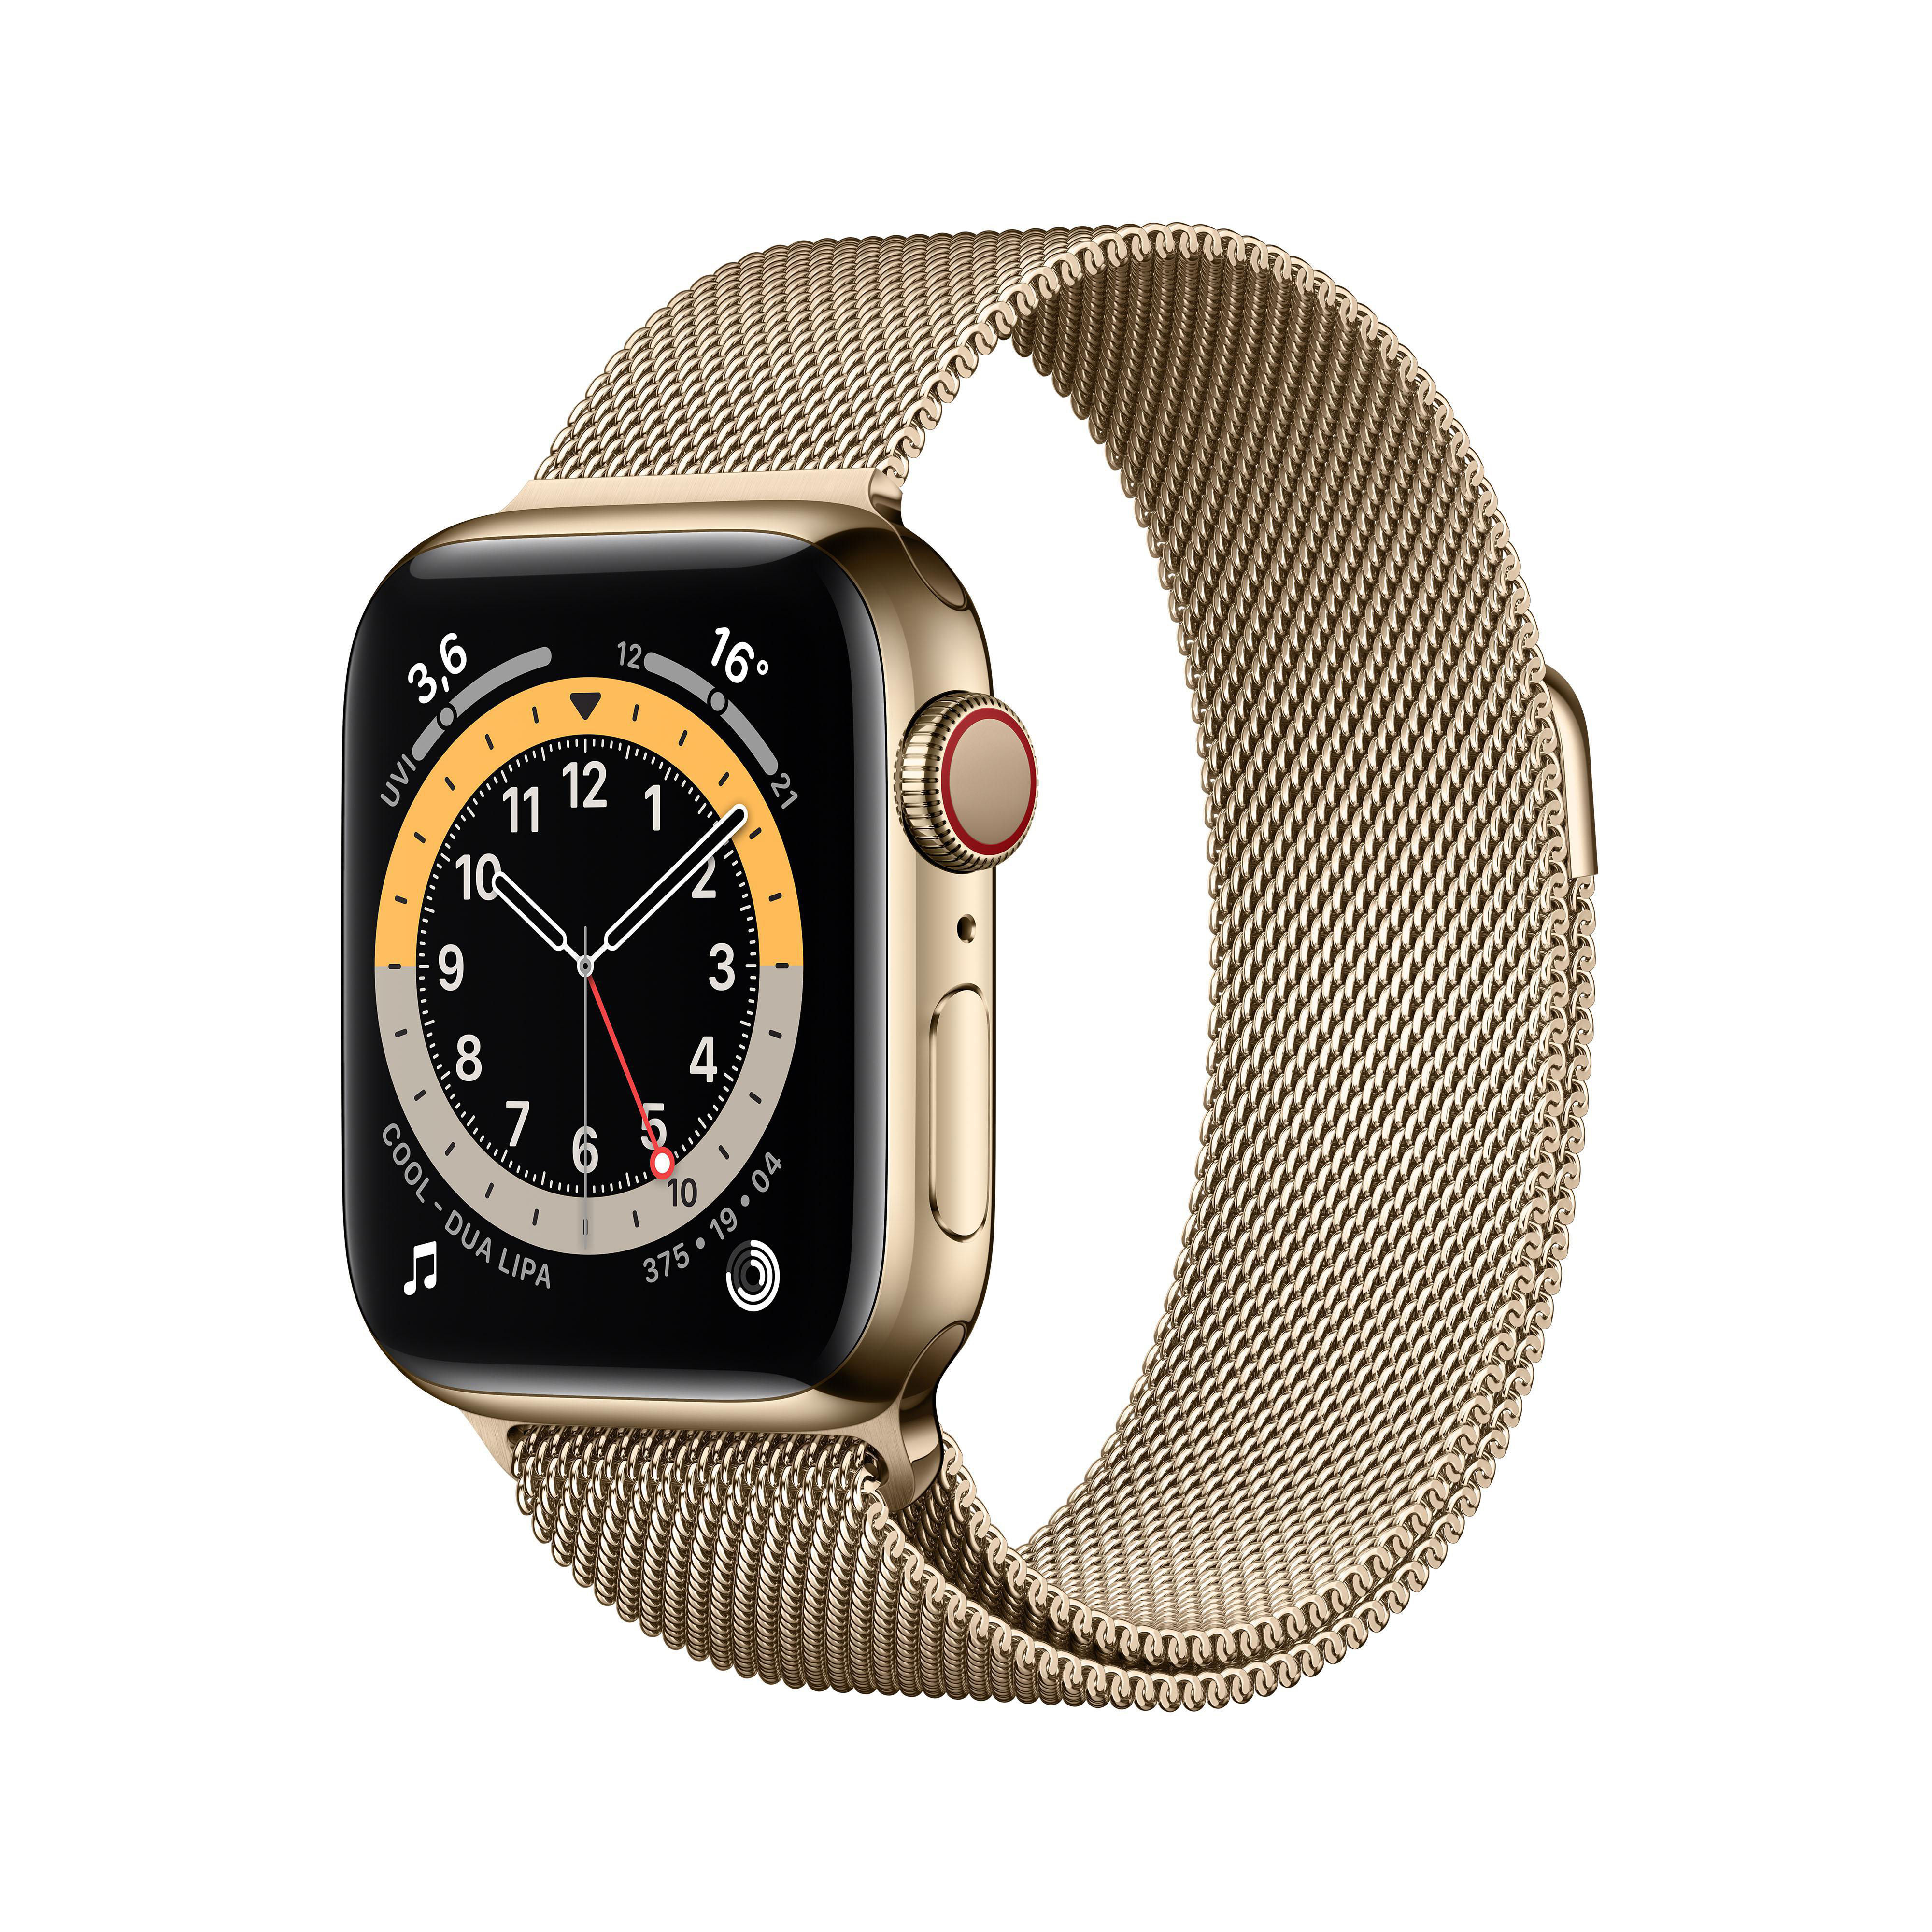 Cellular) Gehäuse: Edelstahl, 130 + Smartwatch 40mm Gold, APPLE Watch Series (GPS 6 mm, - Edelstahl 180 Gold Armband: